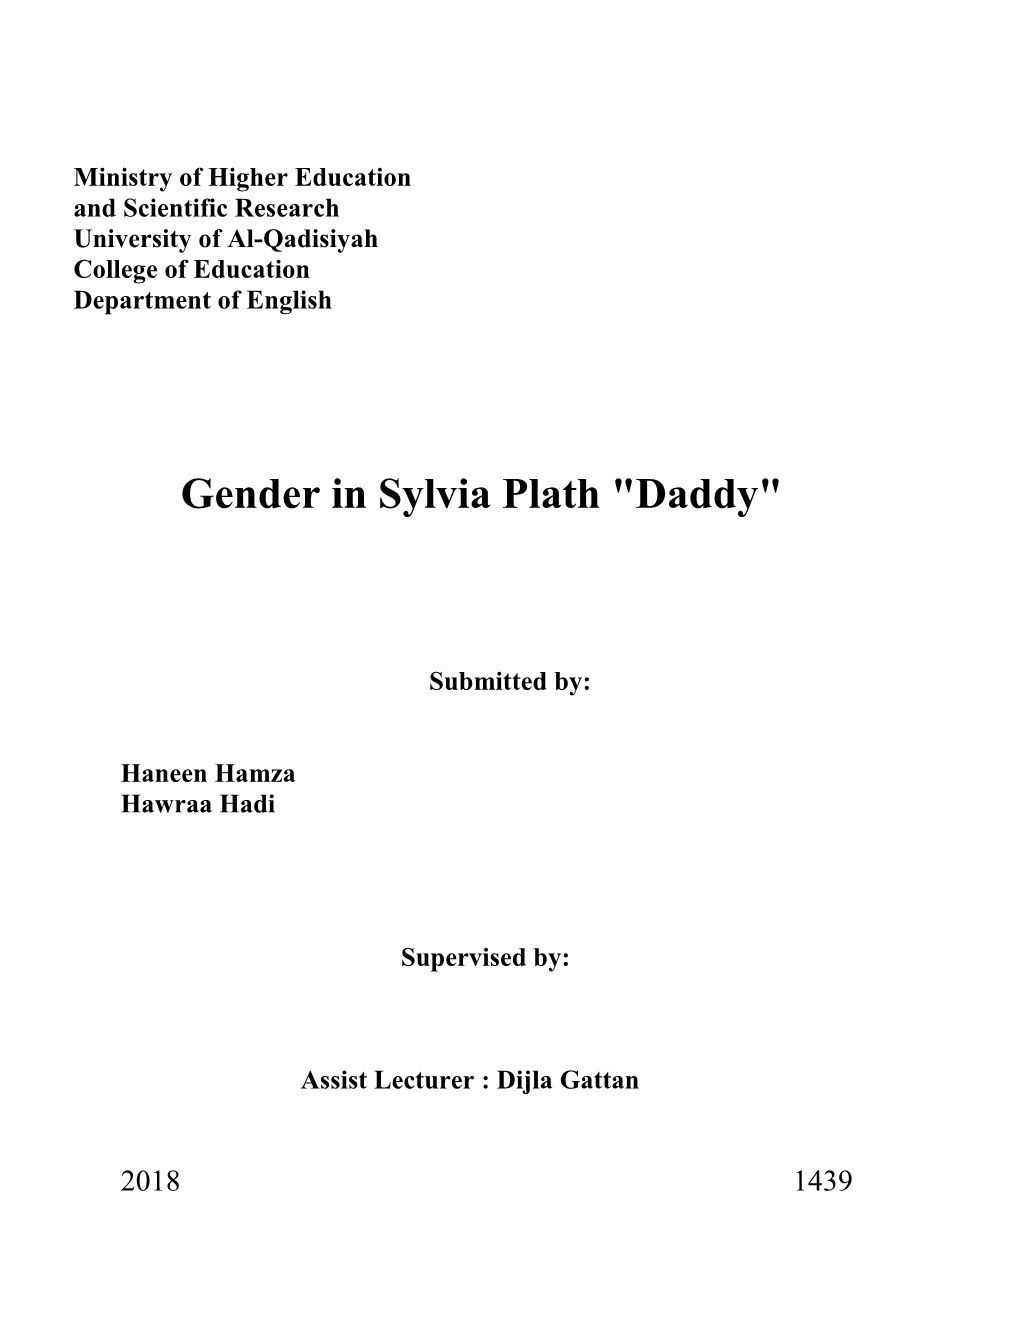 Gender in Sylvia Plath "Daddy"